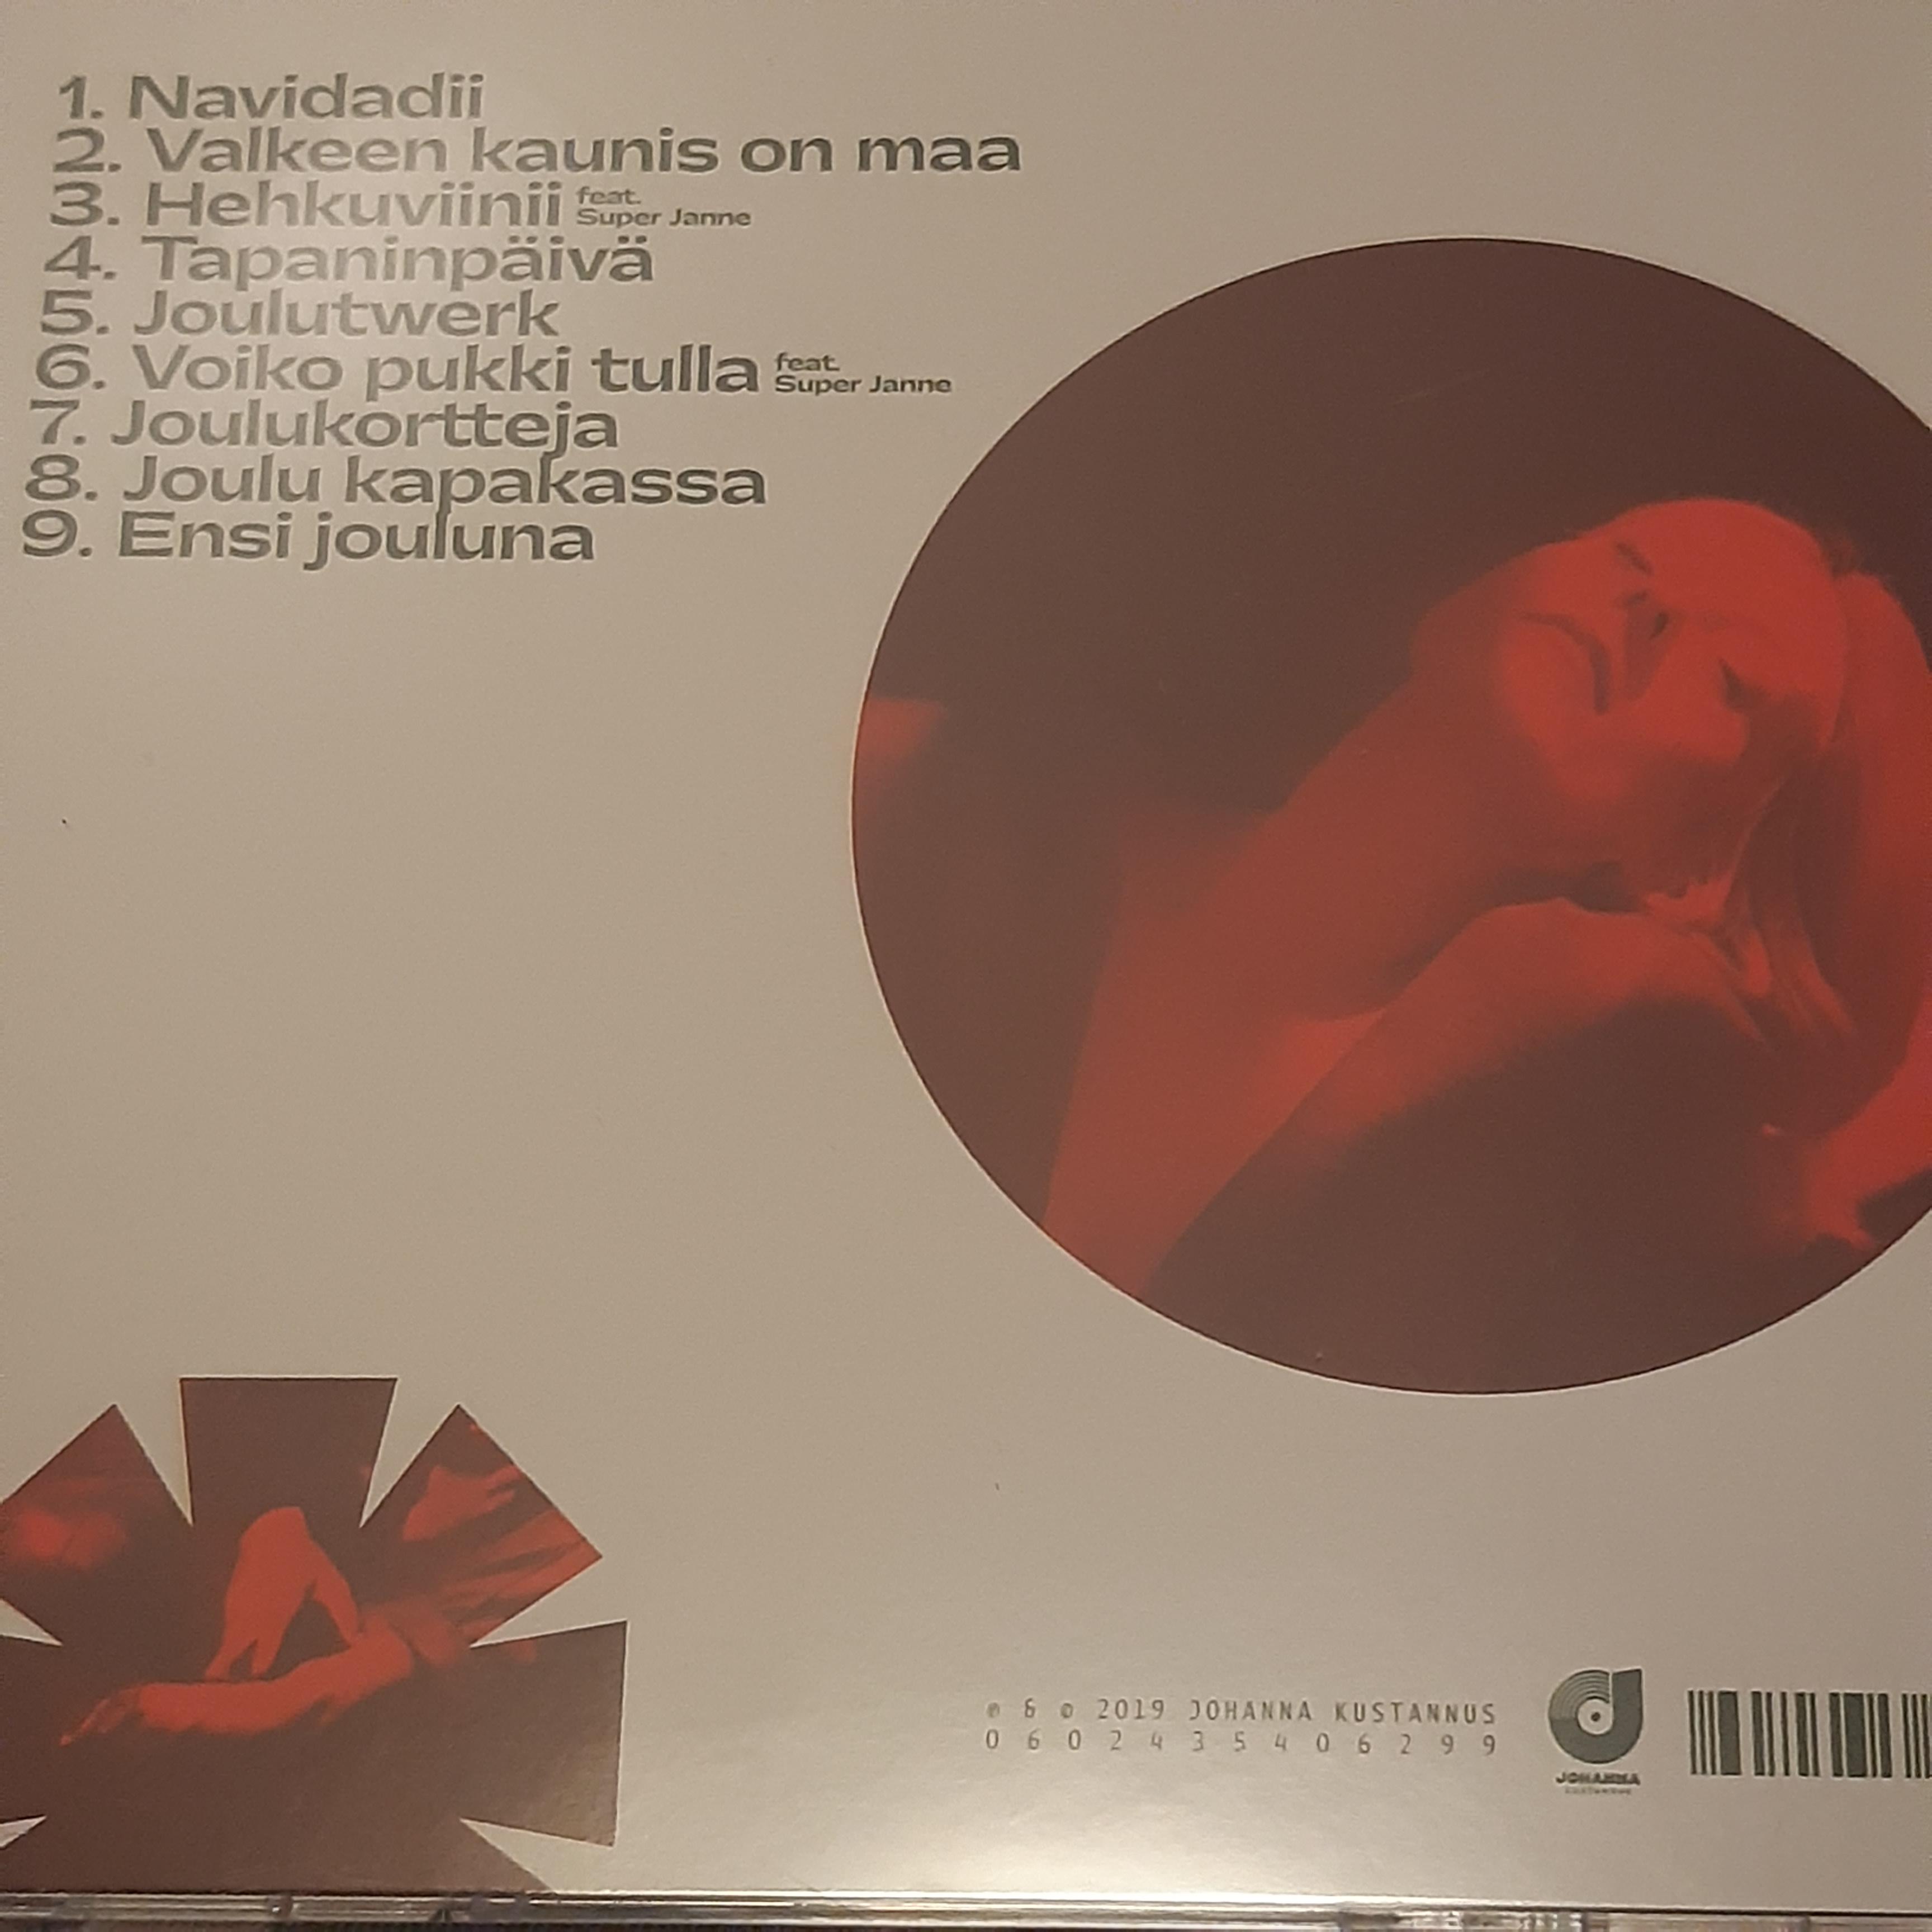 Mariska - Navidadii - CD (uusi)